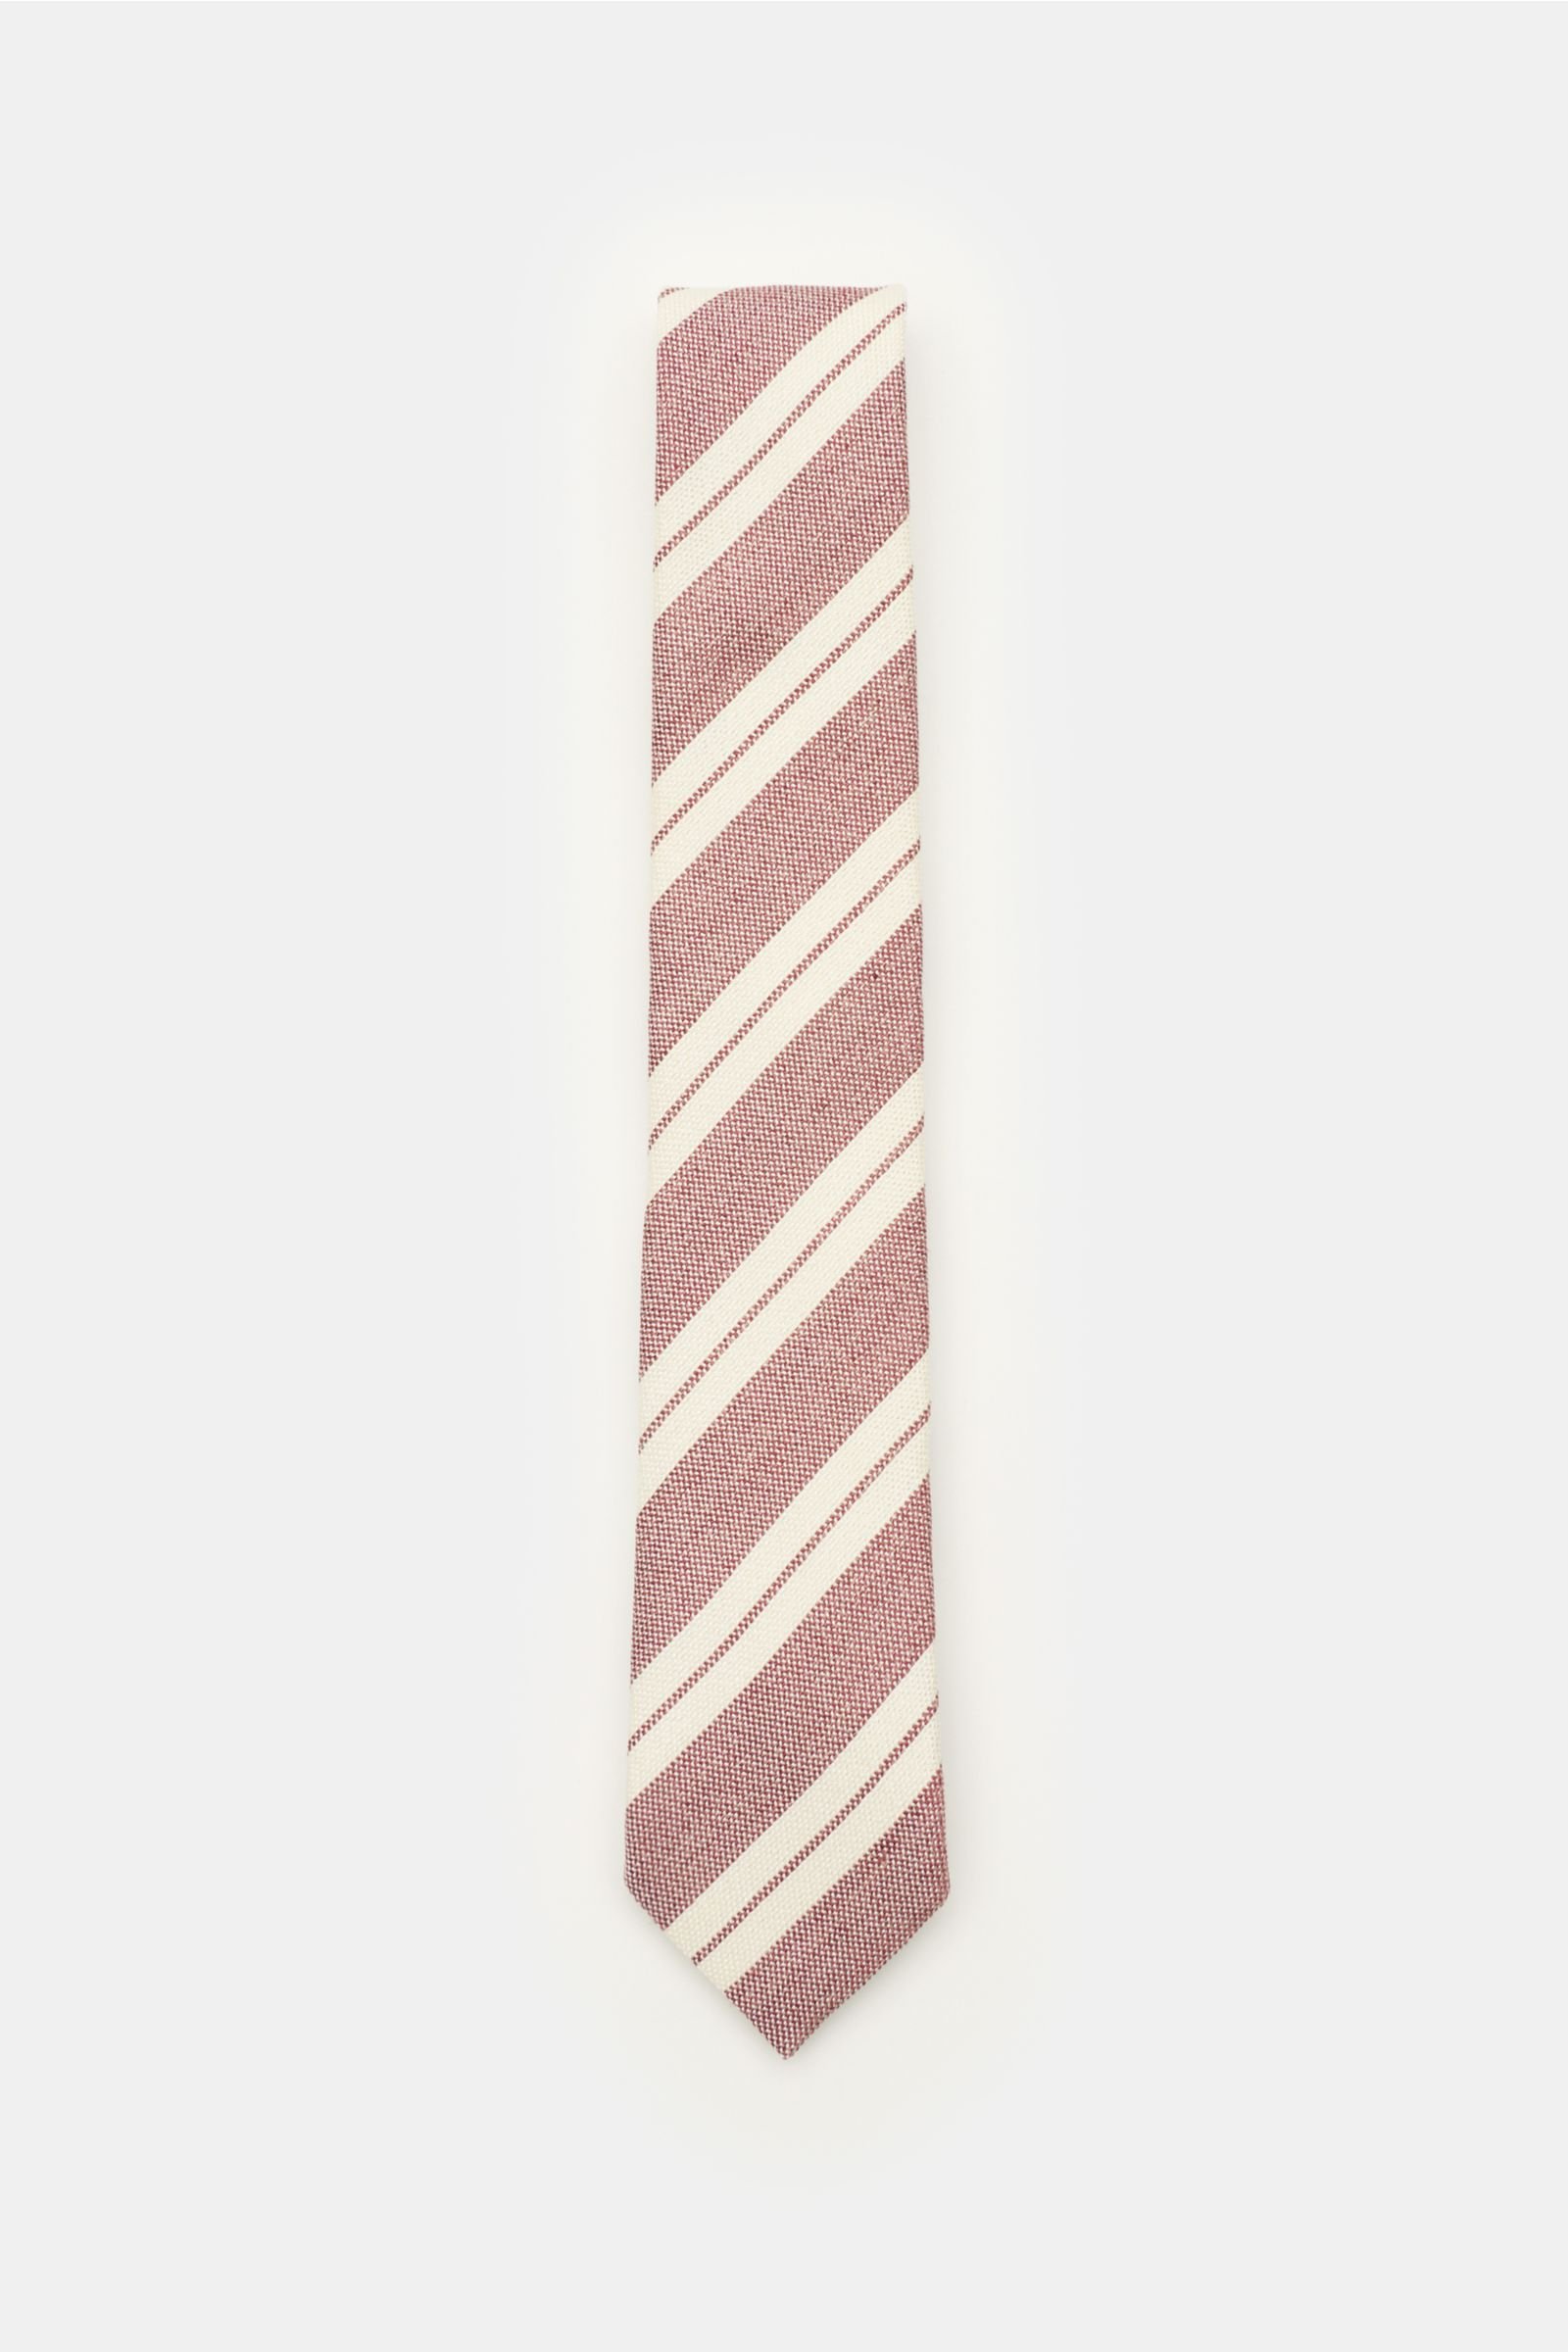 Tie antique pink/cream striped